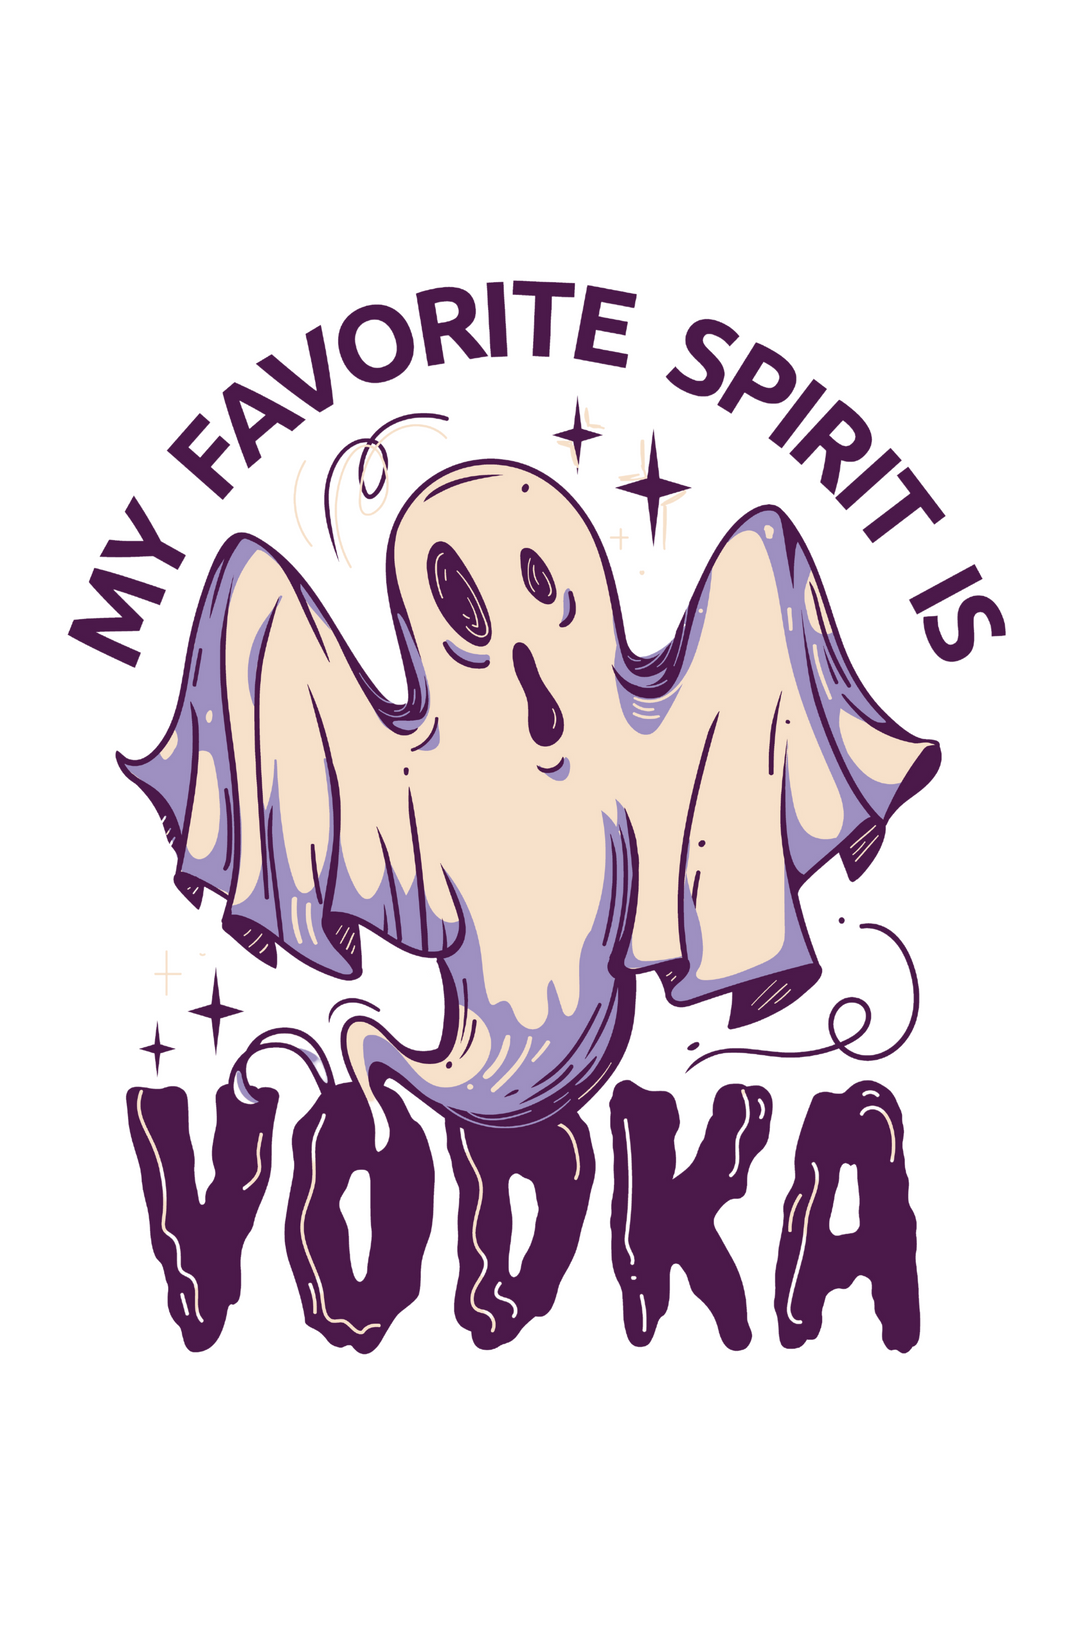 My Favourite Spirit Is Vodka Printed T-Shirt For Women - WowWaves - 1